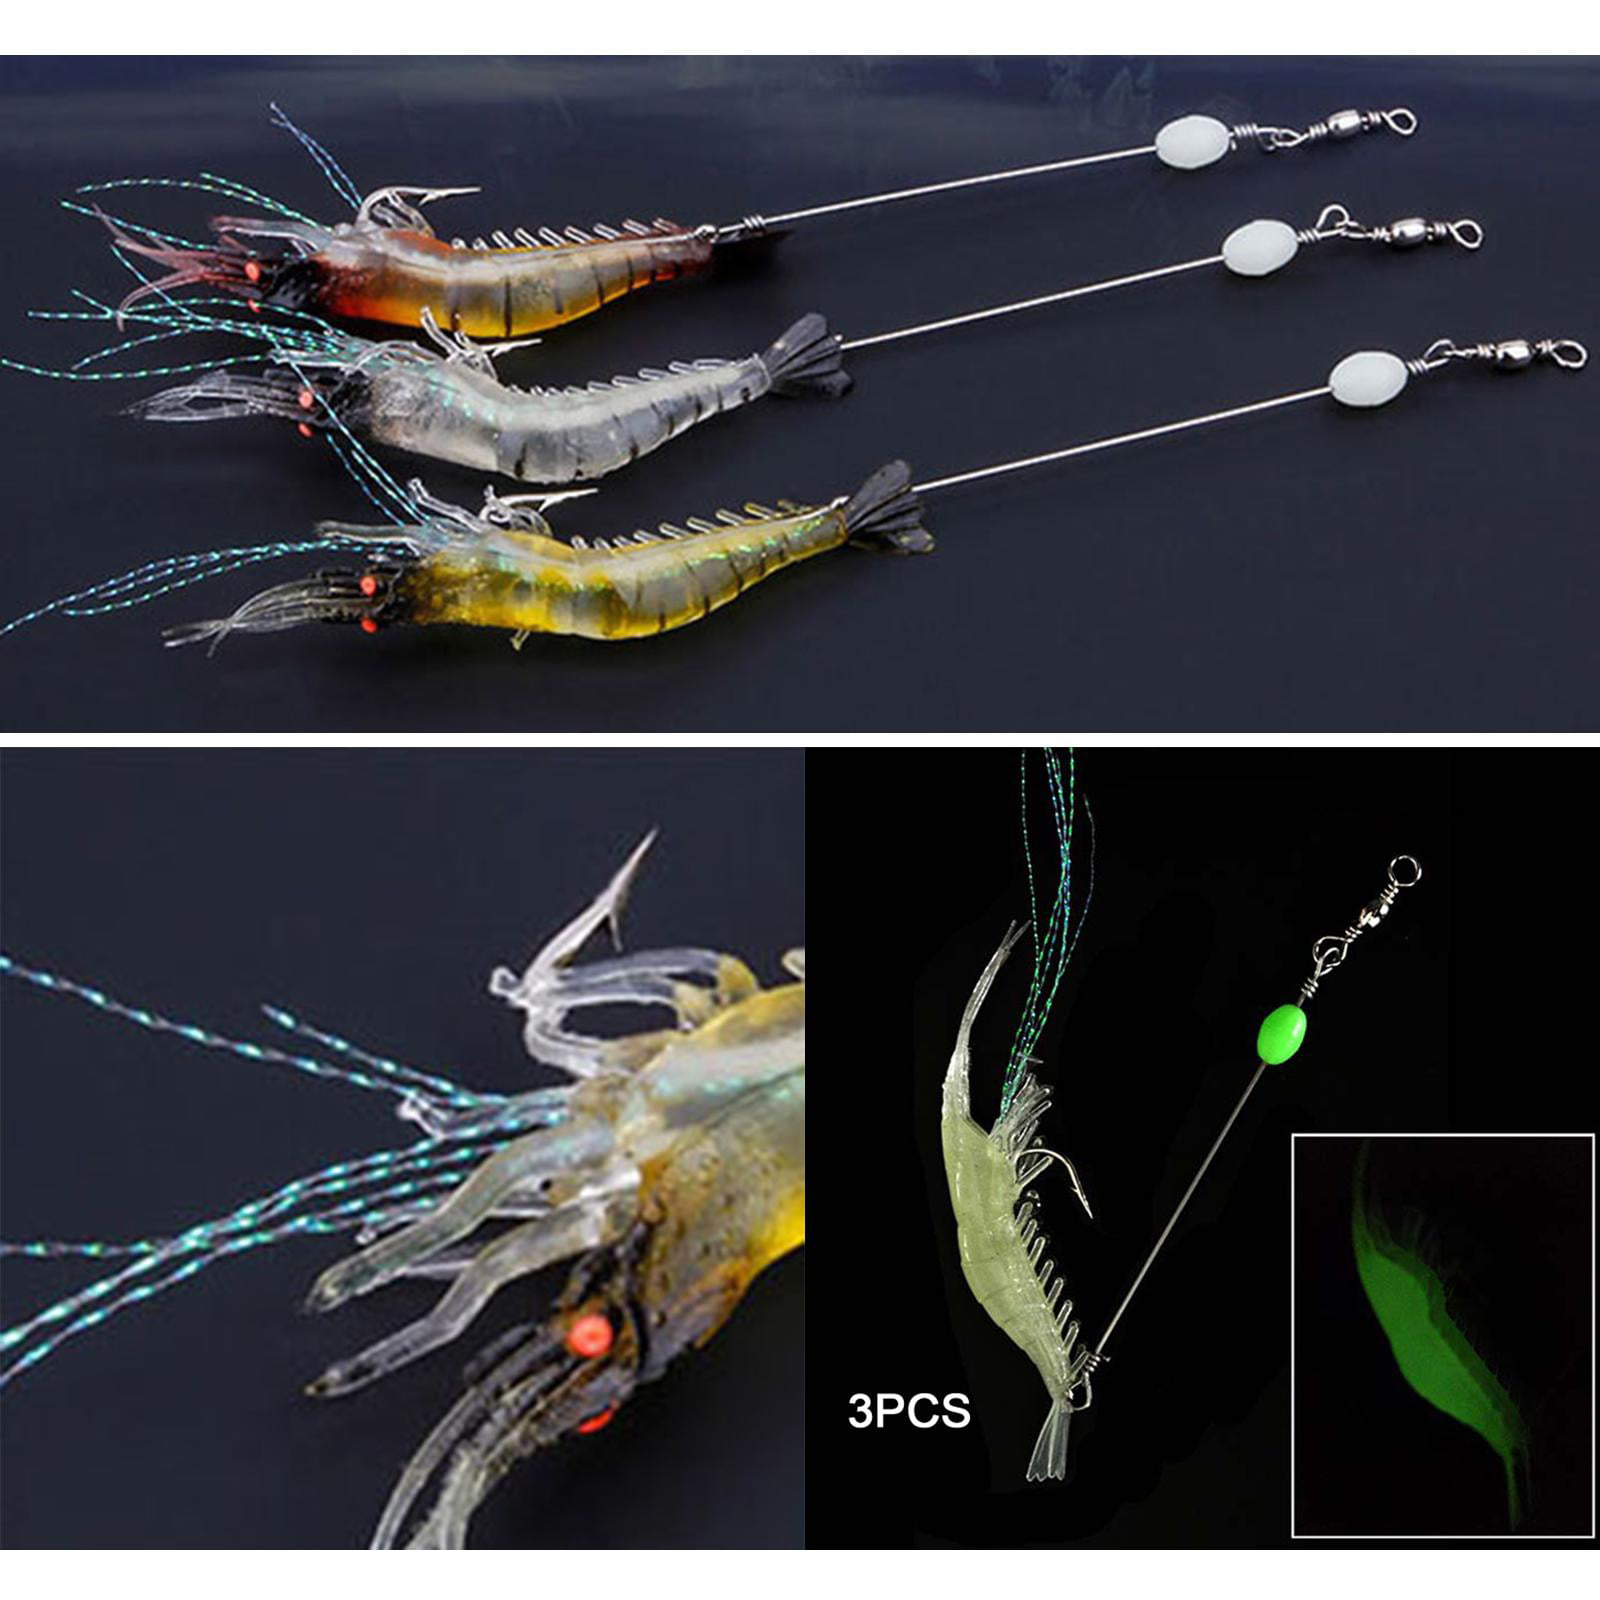 Details about   3Pcs 9cm Simulation Shrimp Fishing Lures Bait Fishing Baits for Bass and Trout,